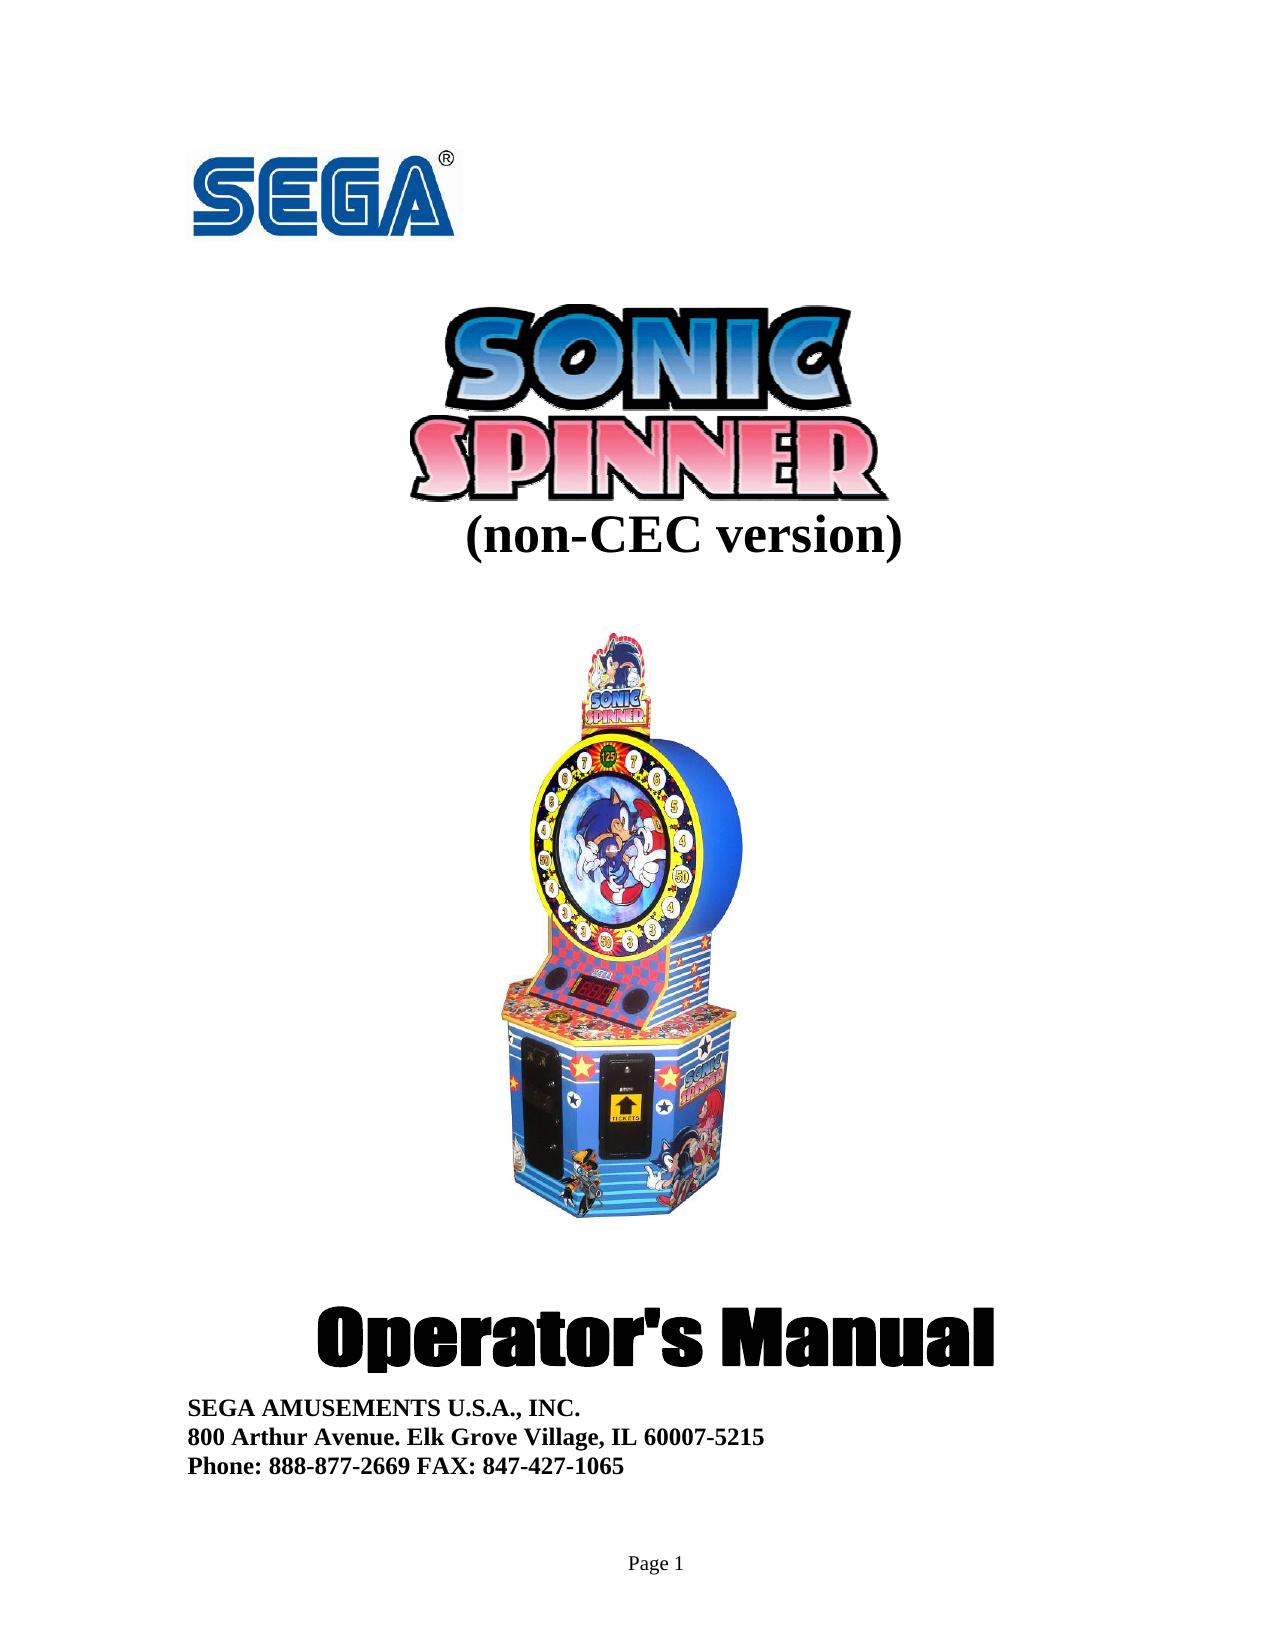 Microsoft Word - 0621907 Sonic Spinner 07 Manual _Non CEC ver_.doc